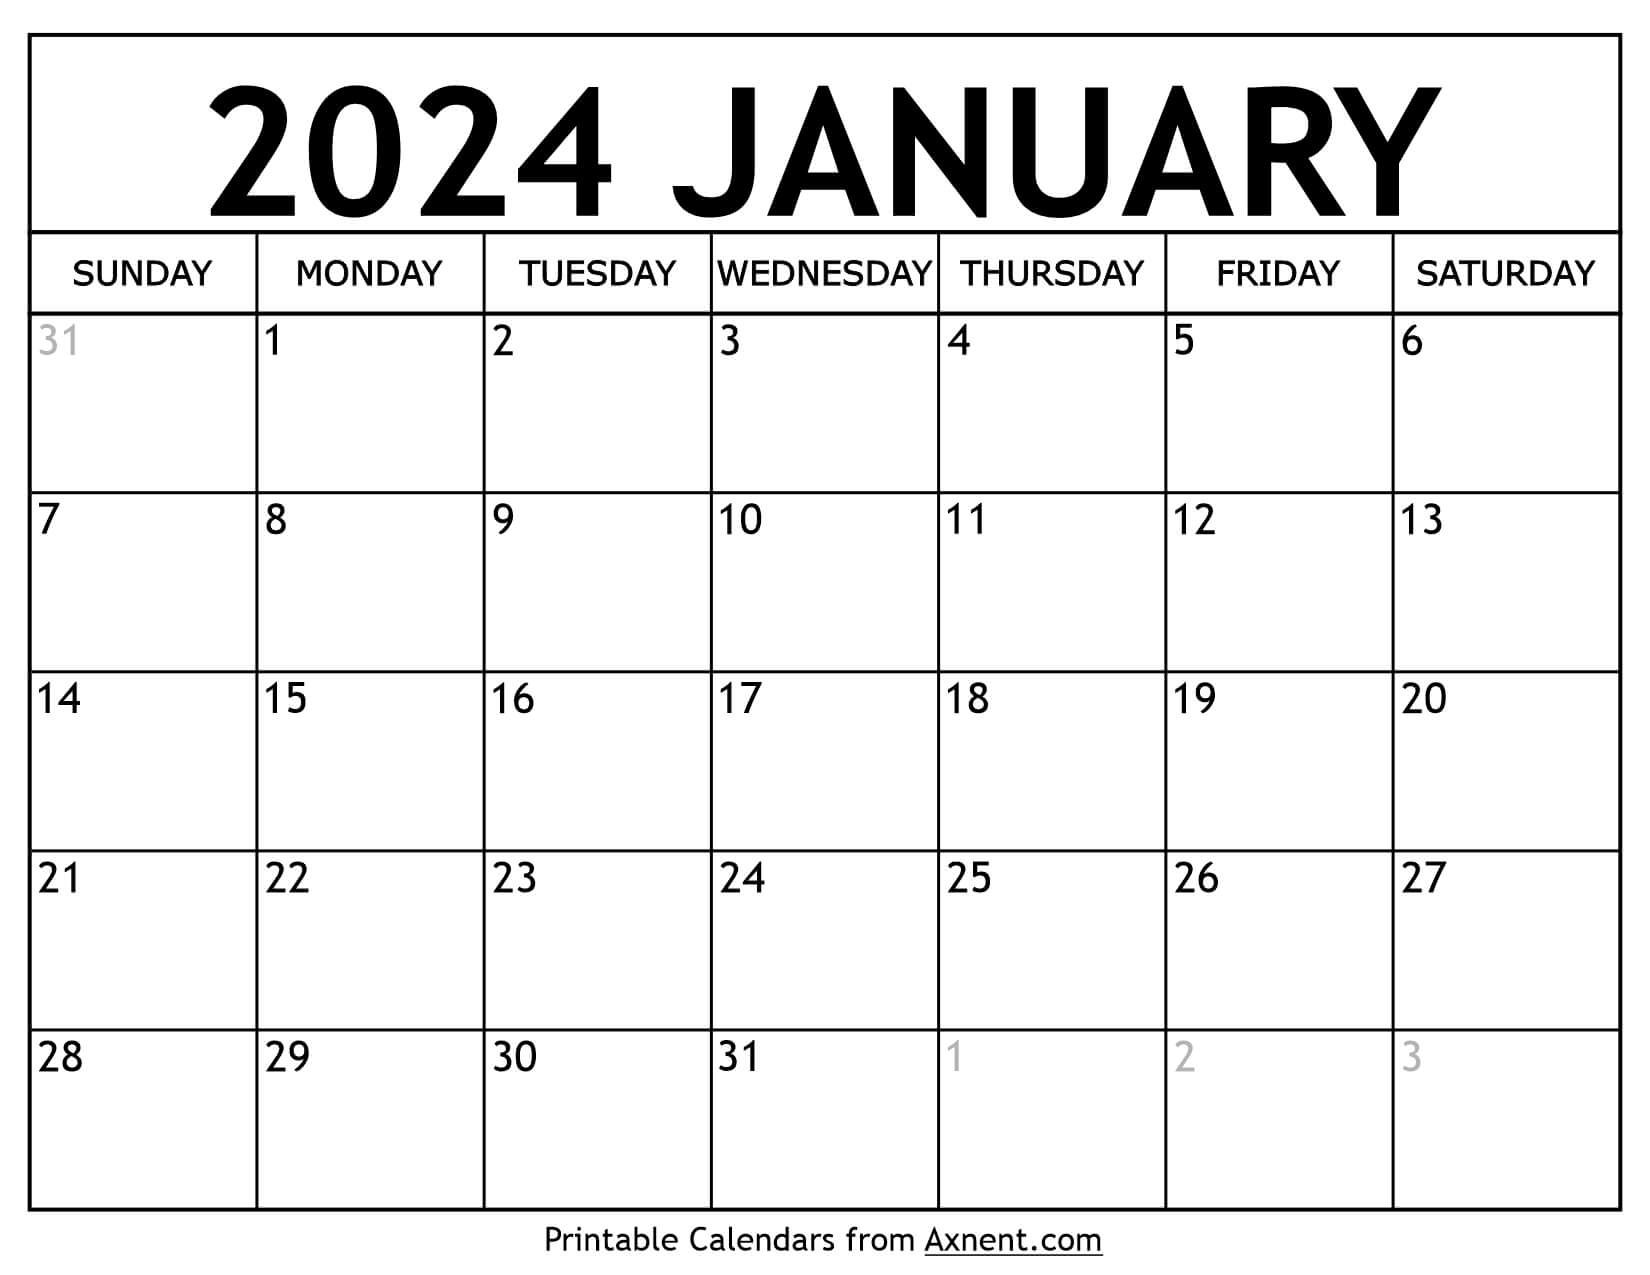 Printable January 2024 Calendar Template - Print Now for Free Printable Calendar 2024 January